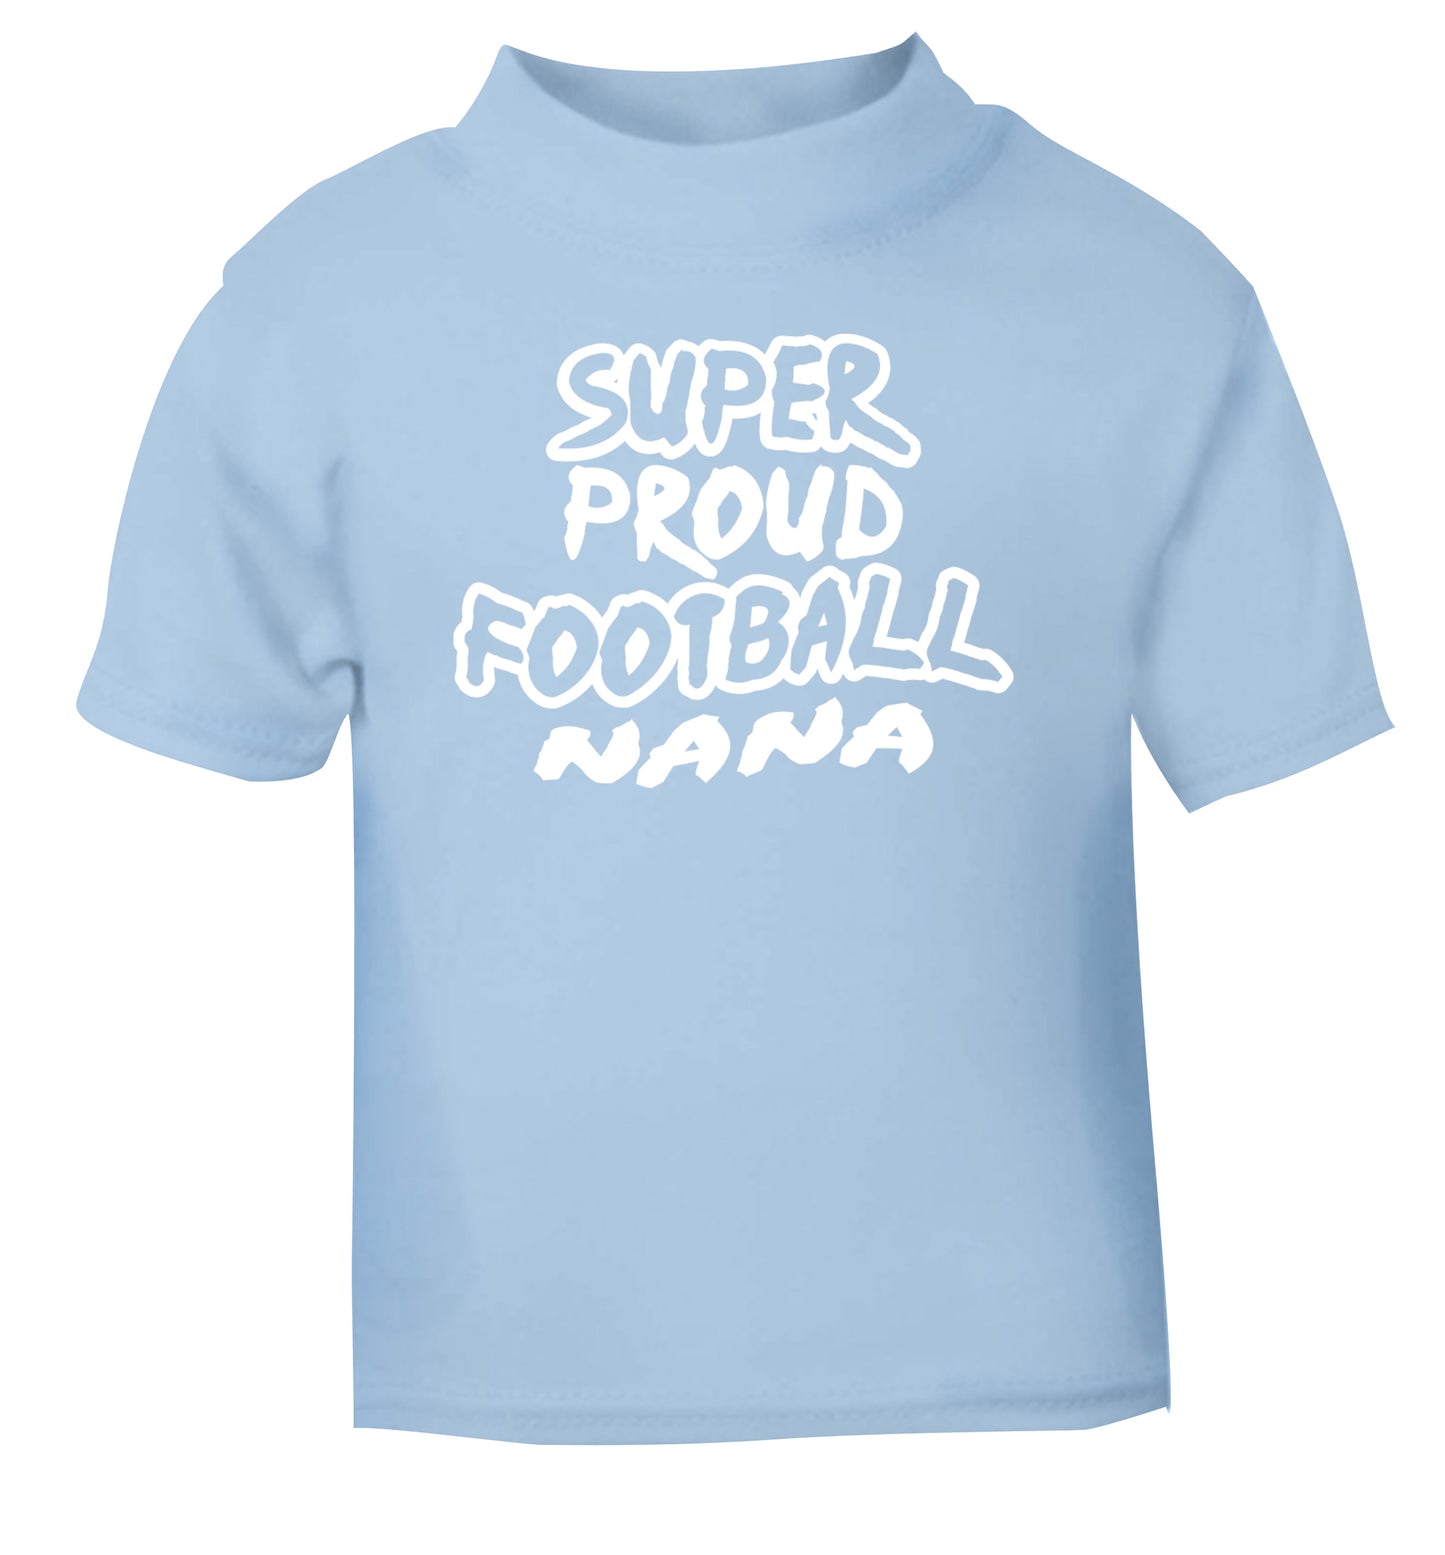 Super proud football nana light blue Baby Toddler Tshirt 2 Years